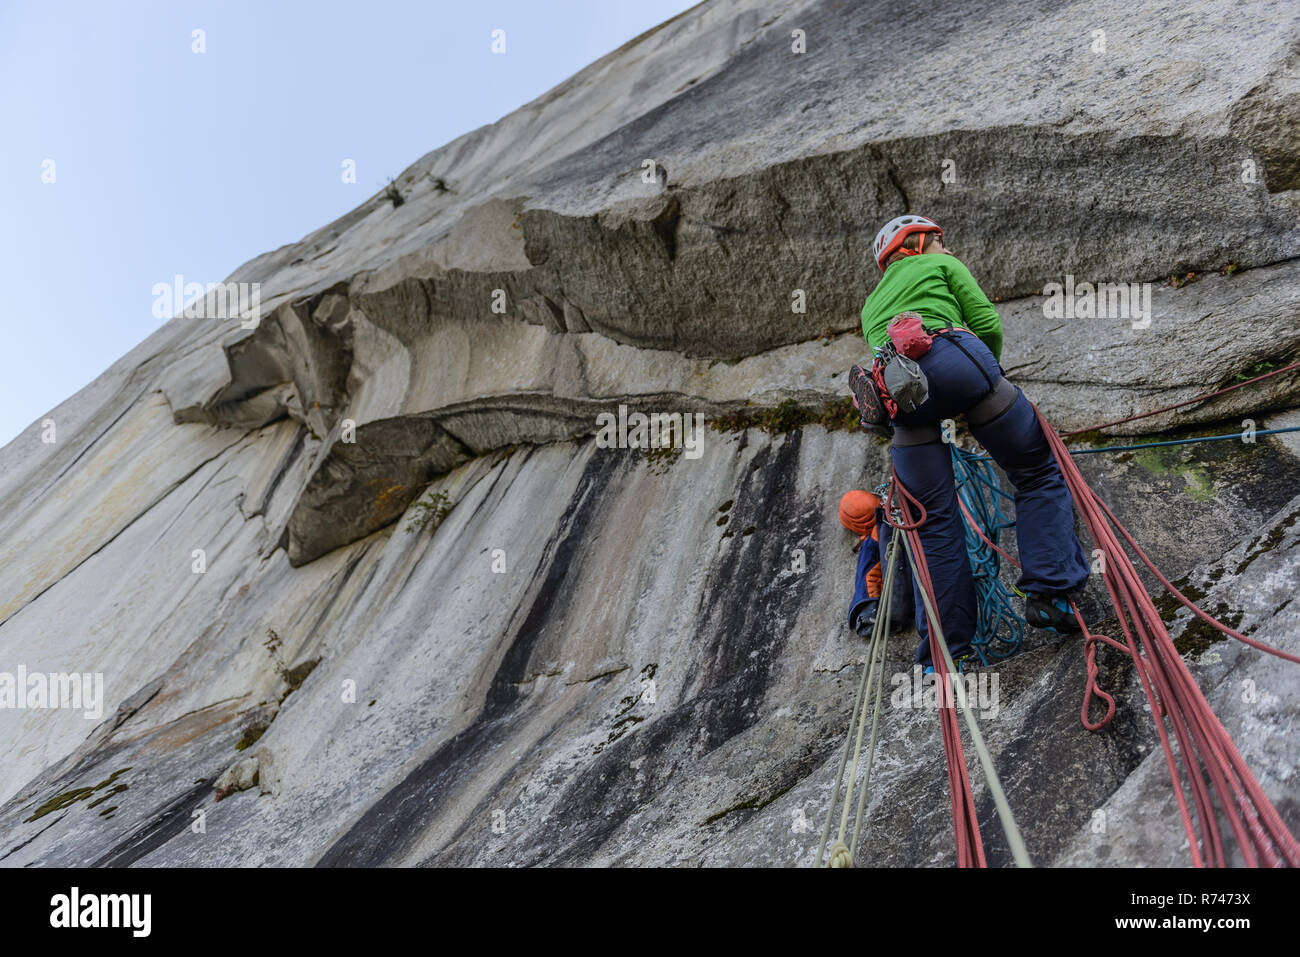 Junge weibliche Kletterer klettern Fels, Low Angle View, der Chief, Squamish, British Columbia, Kanada Stockfoto